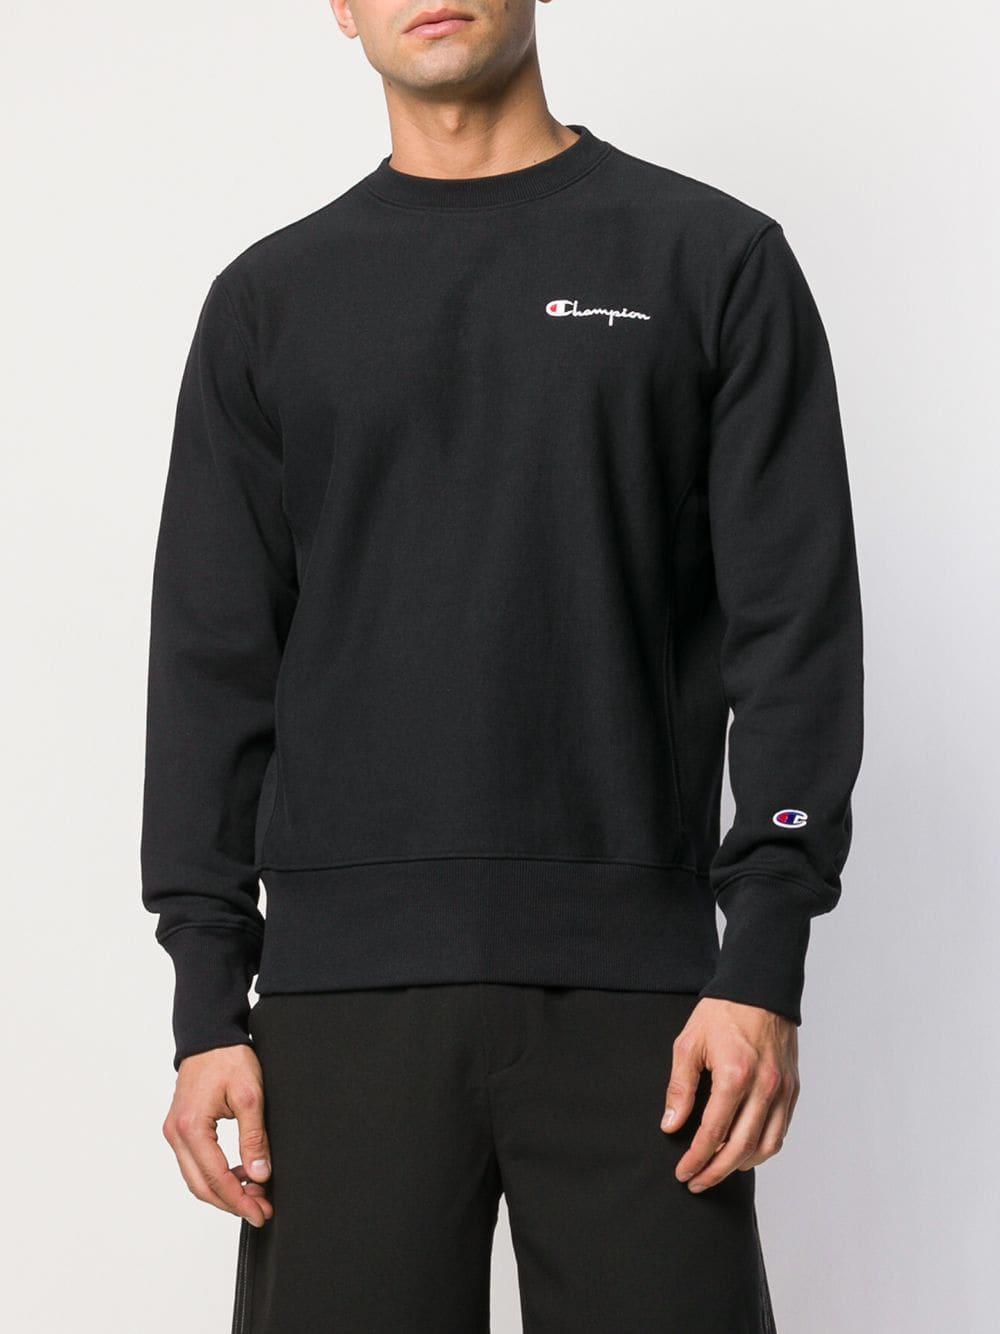 Champion Logo Embroidered Sweatshirt in Black for Men - Lyst